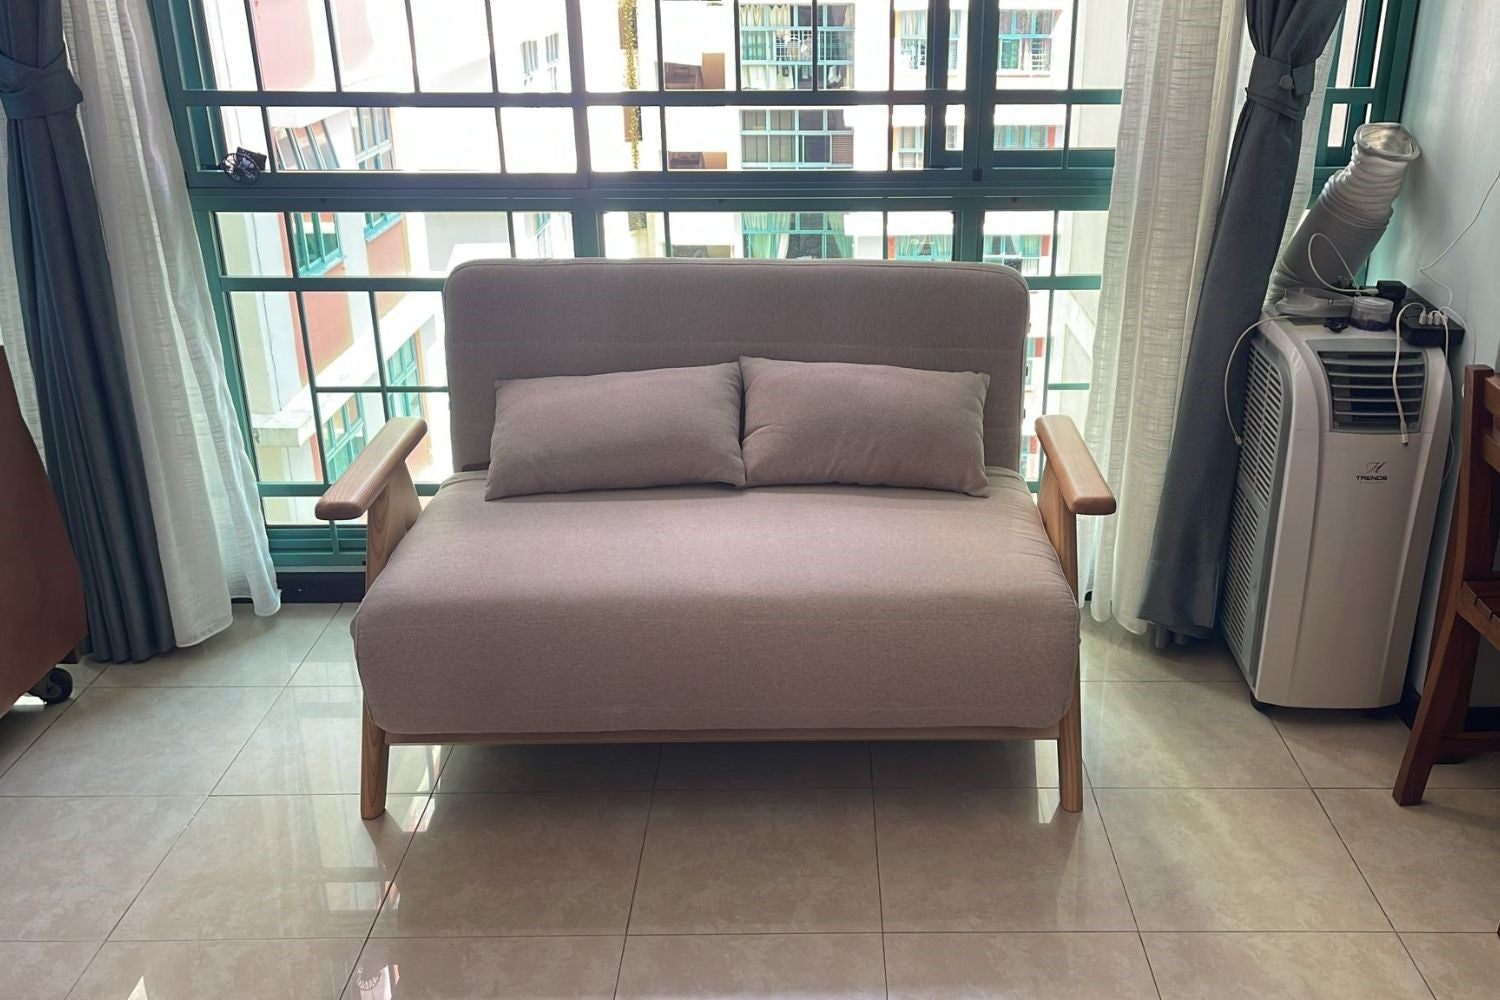 Corona 135cm beige fabric sofa bed Chin Hwee | Jun 24